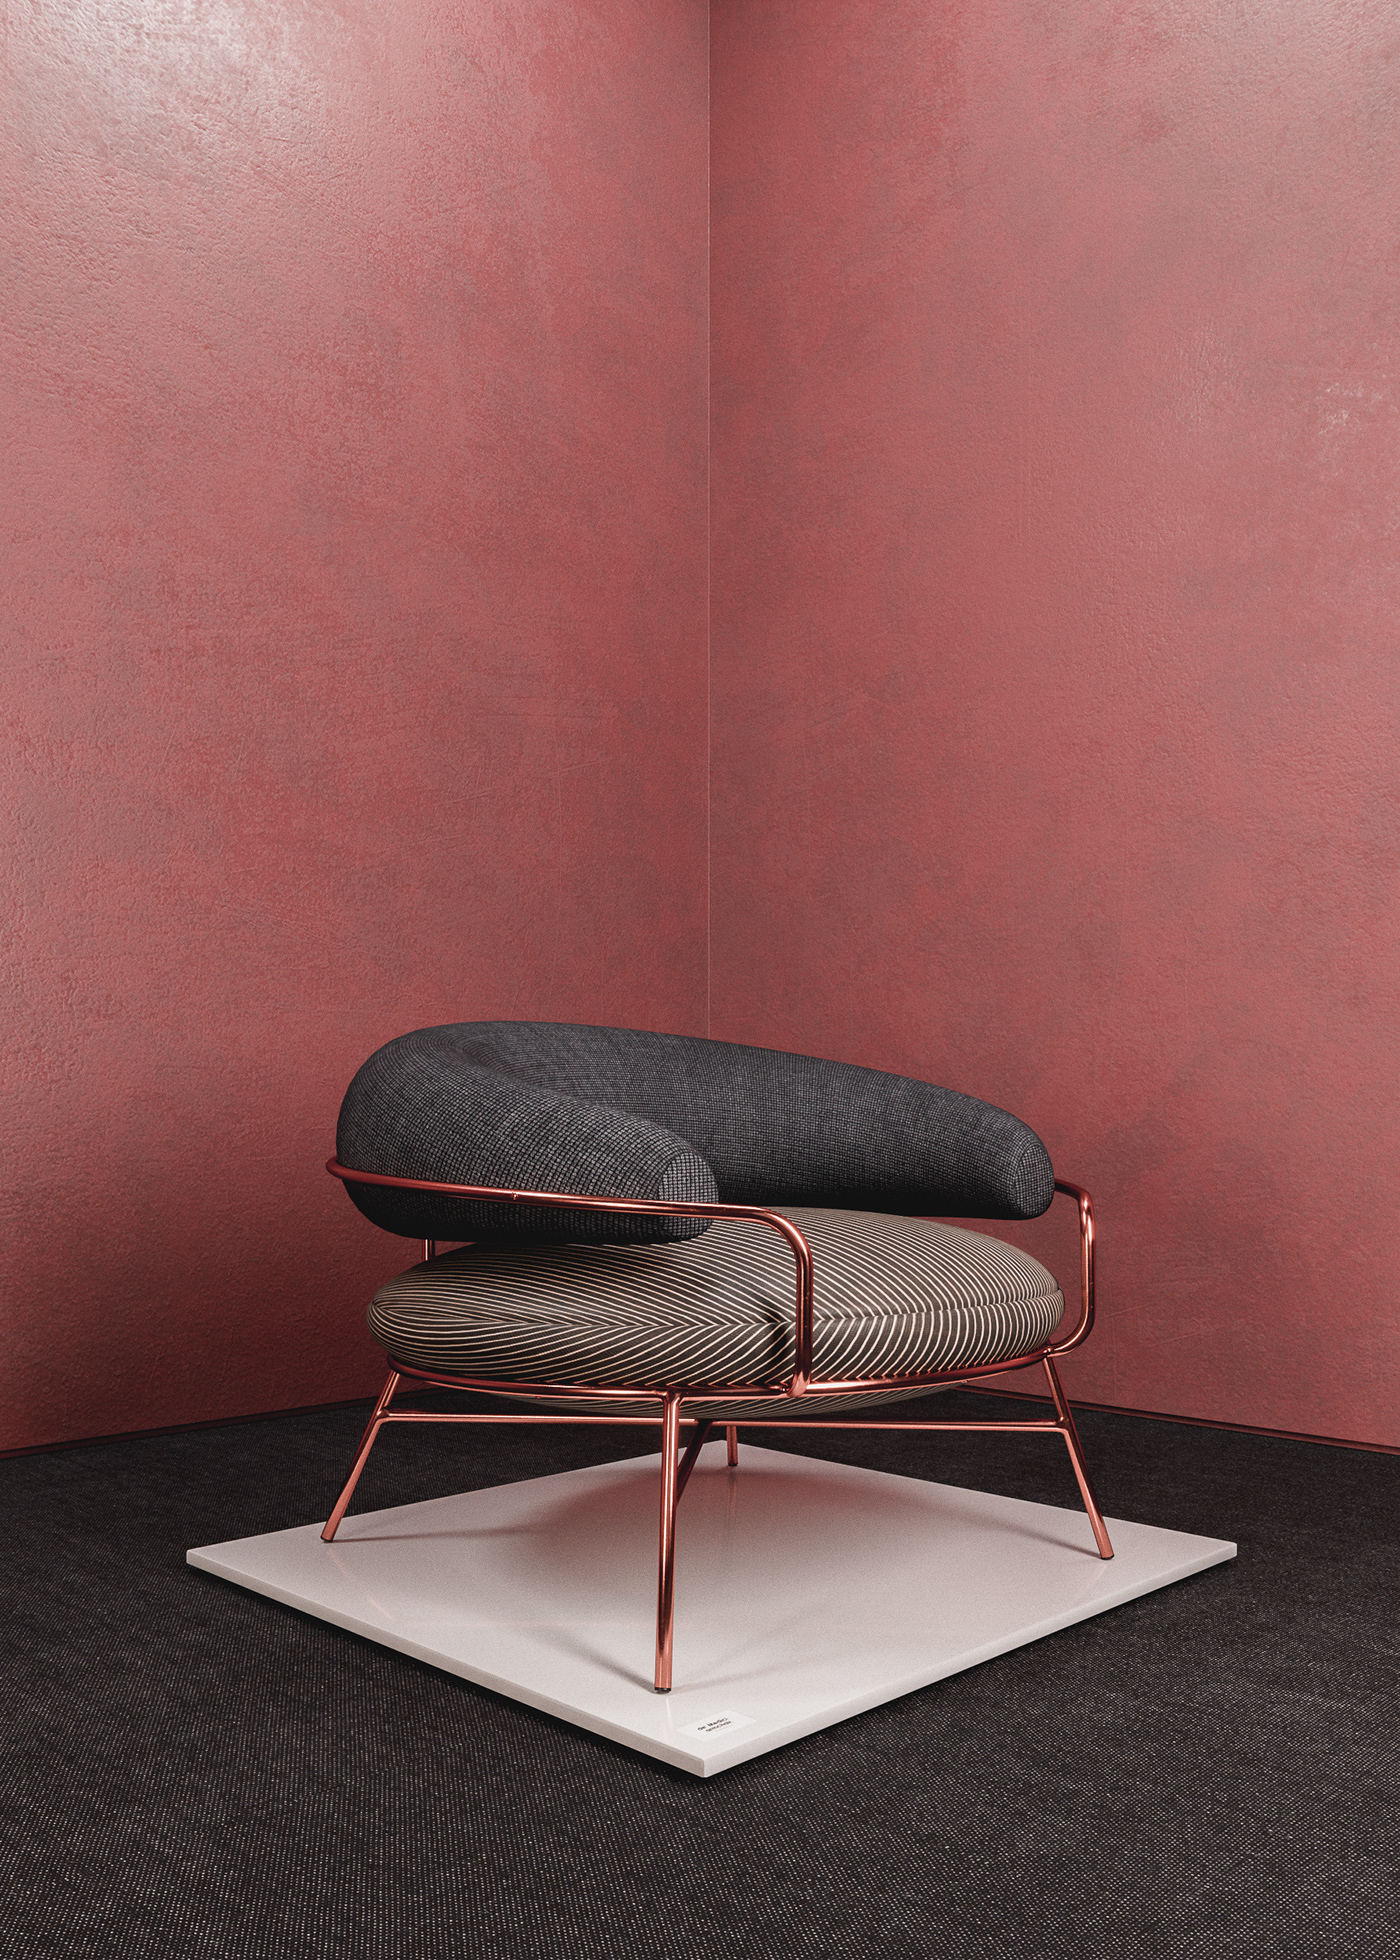 furniture sofa chair design contemporary art decoration elegant modern